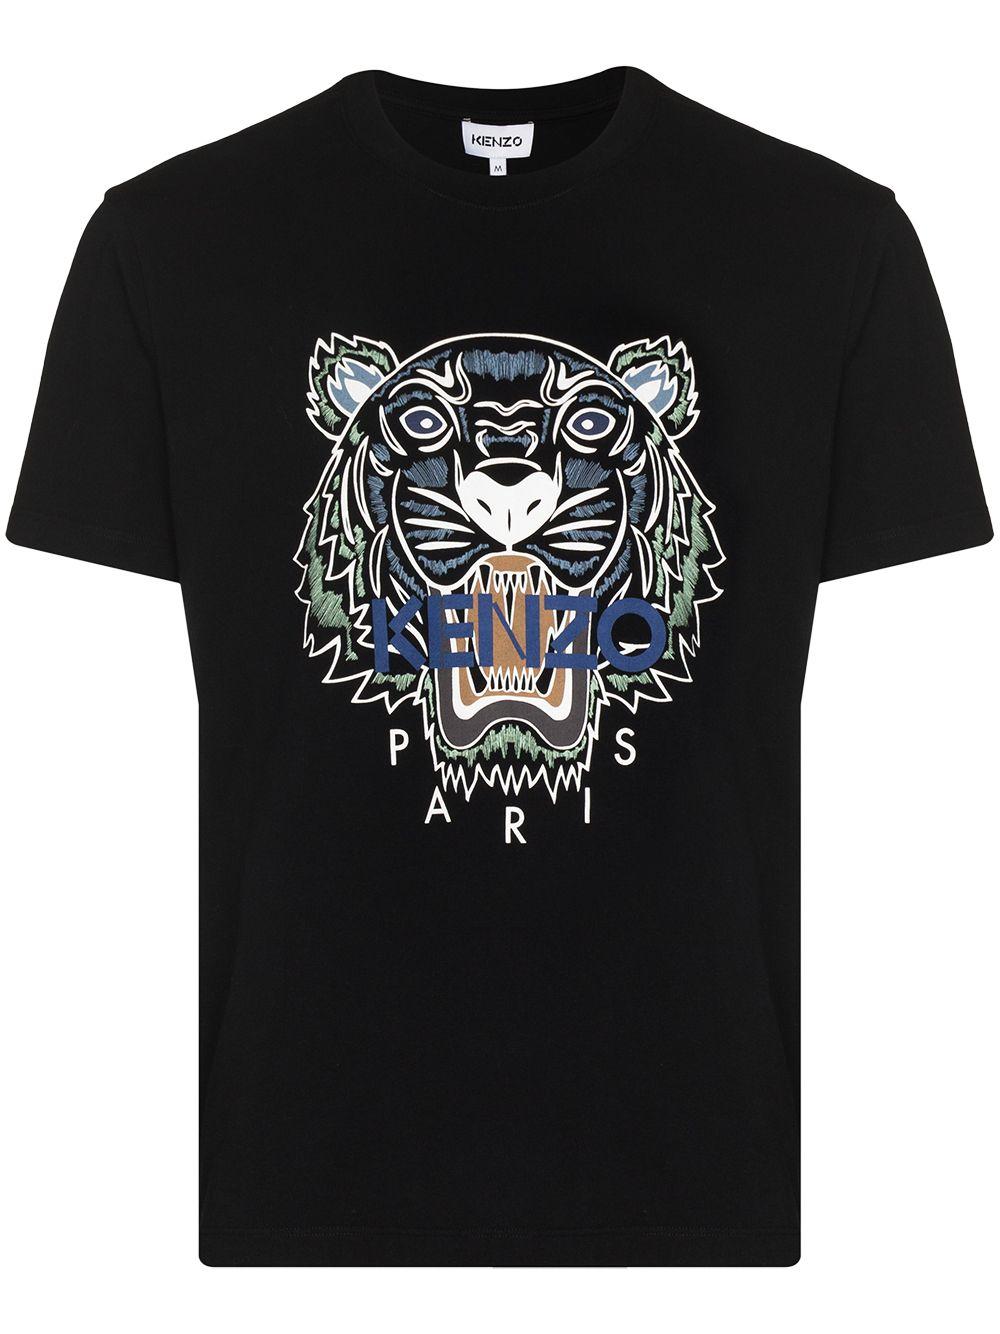 KENZO Tiger Classic T-shirt Black for Men | Lyst